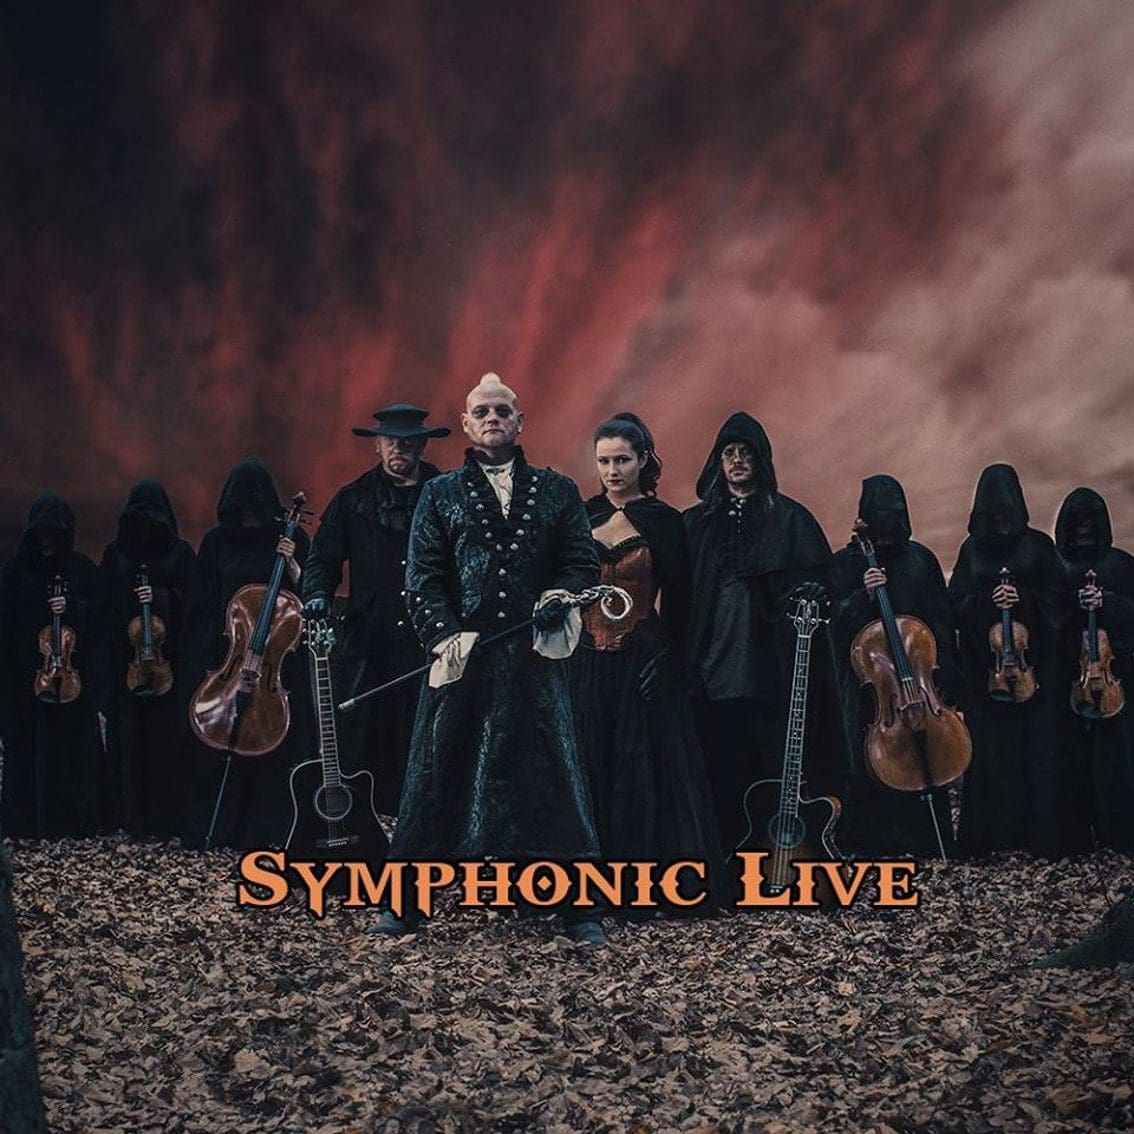 Mono Inc. returns with live album 'Symphonic Live' on 2CD (2CD/DVD set)